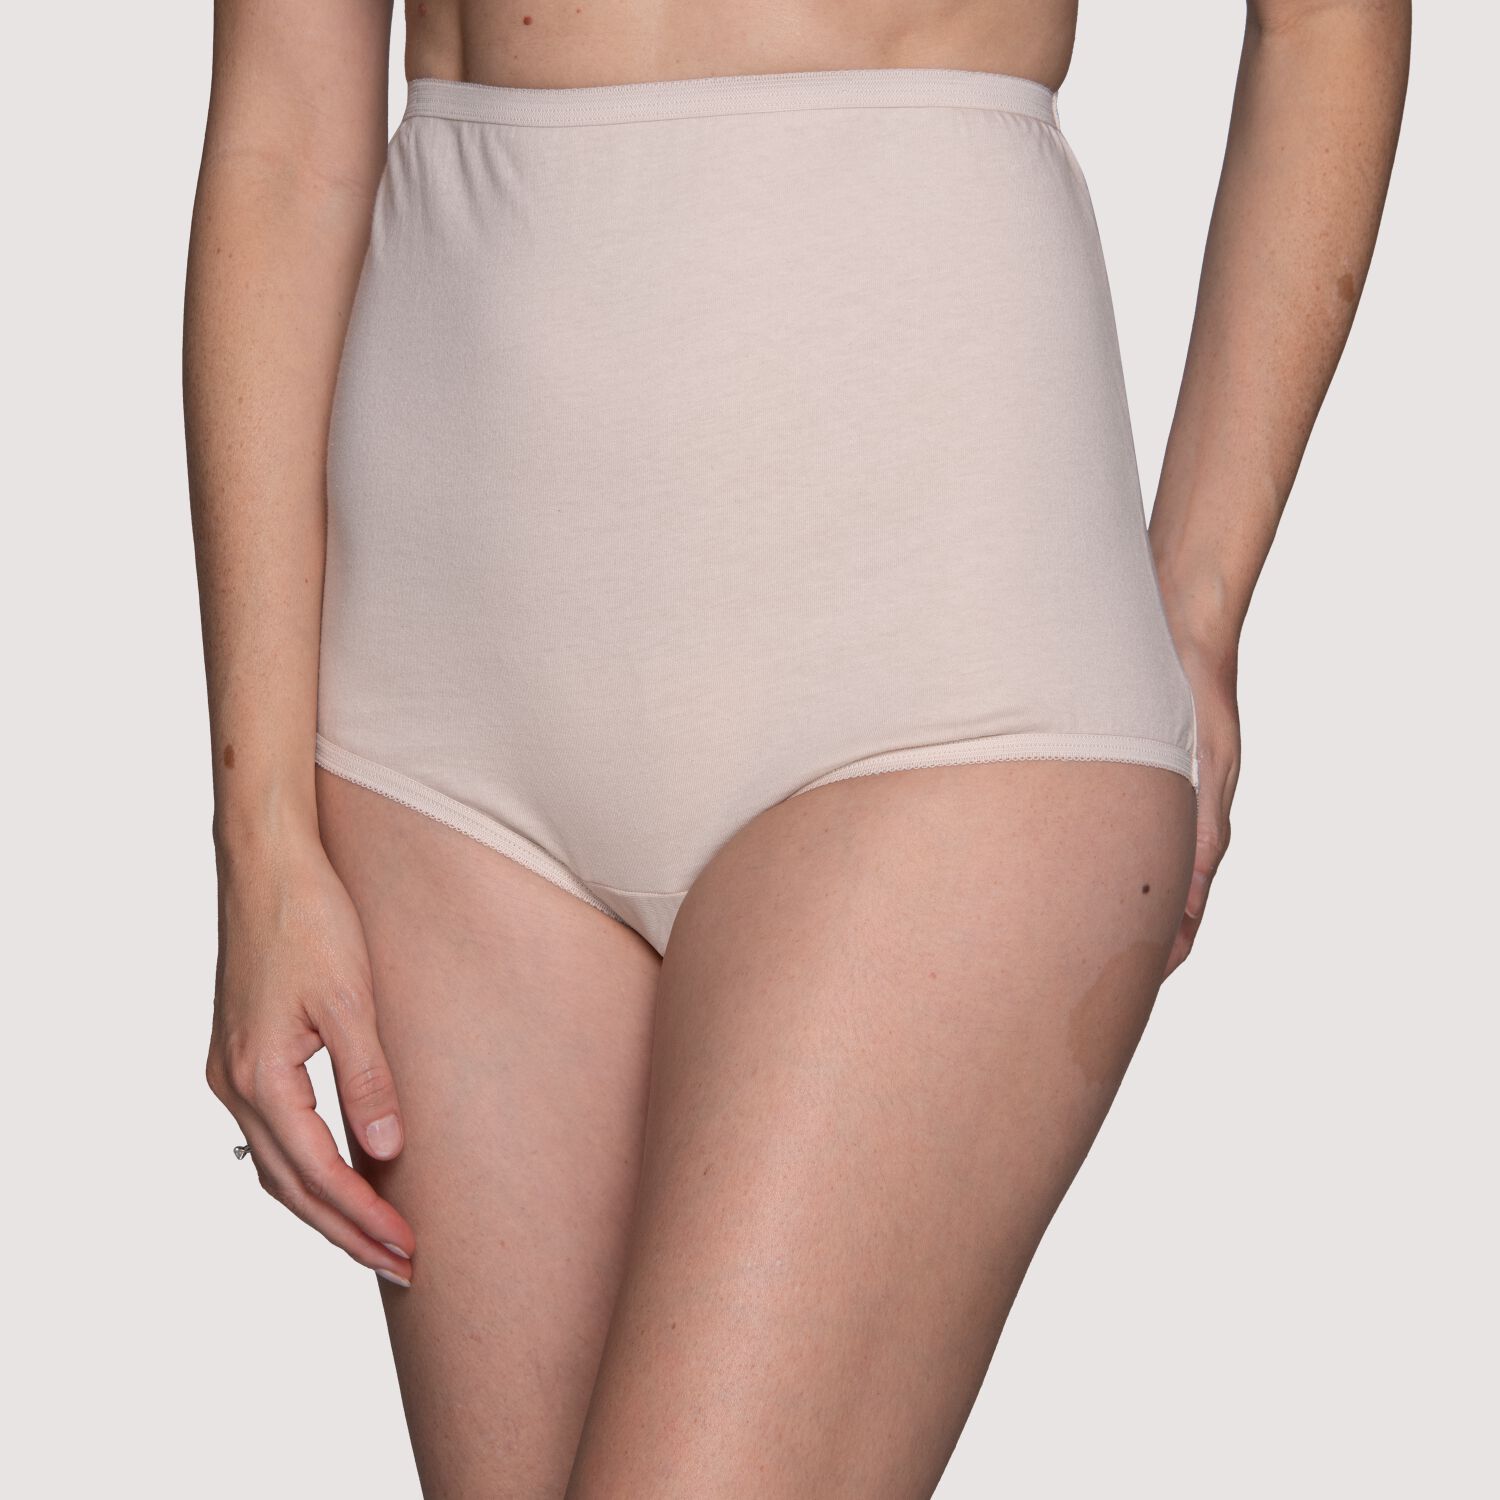 Briefs Underwear Lace M~3XL Nylon+Spandex Panties Plus Sexy Skin Friendly 